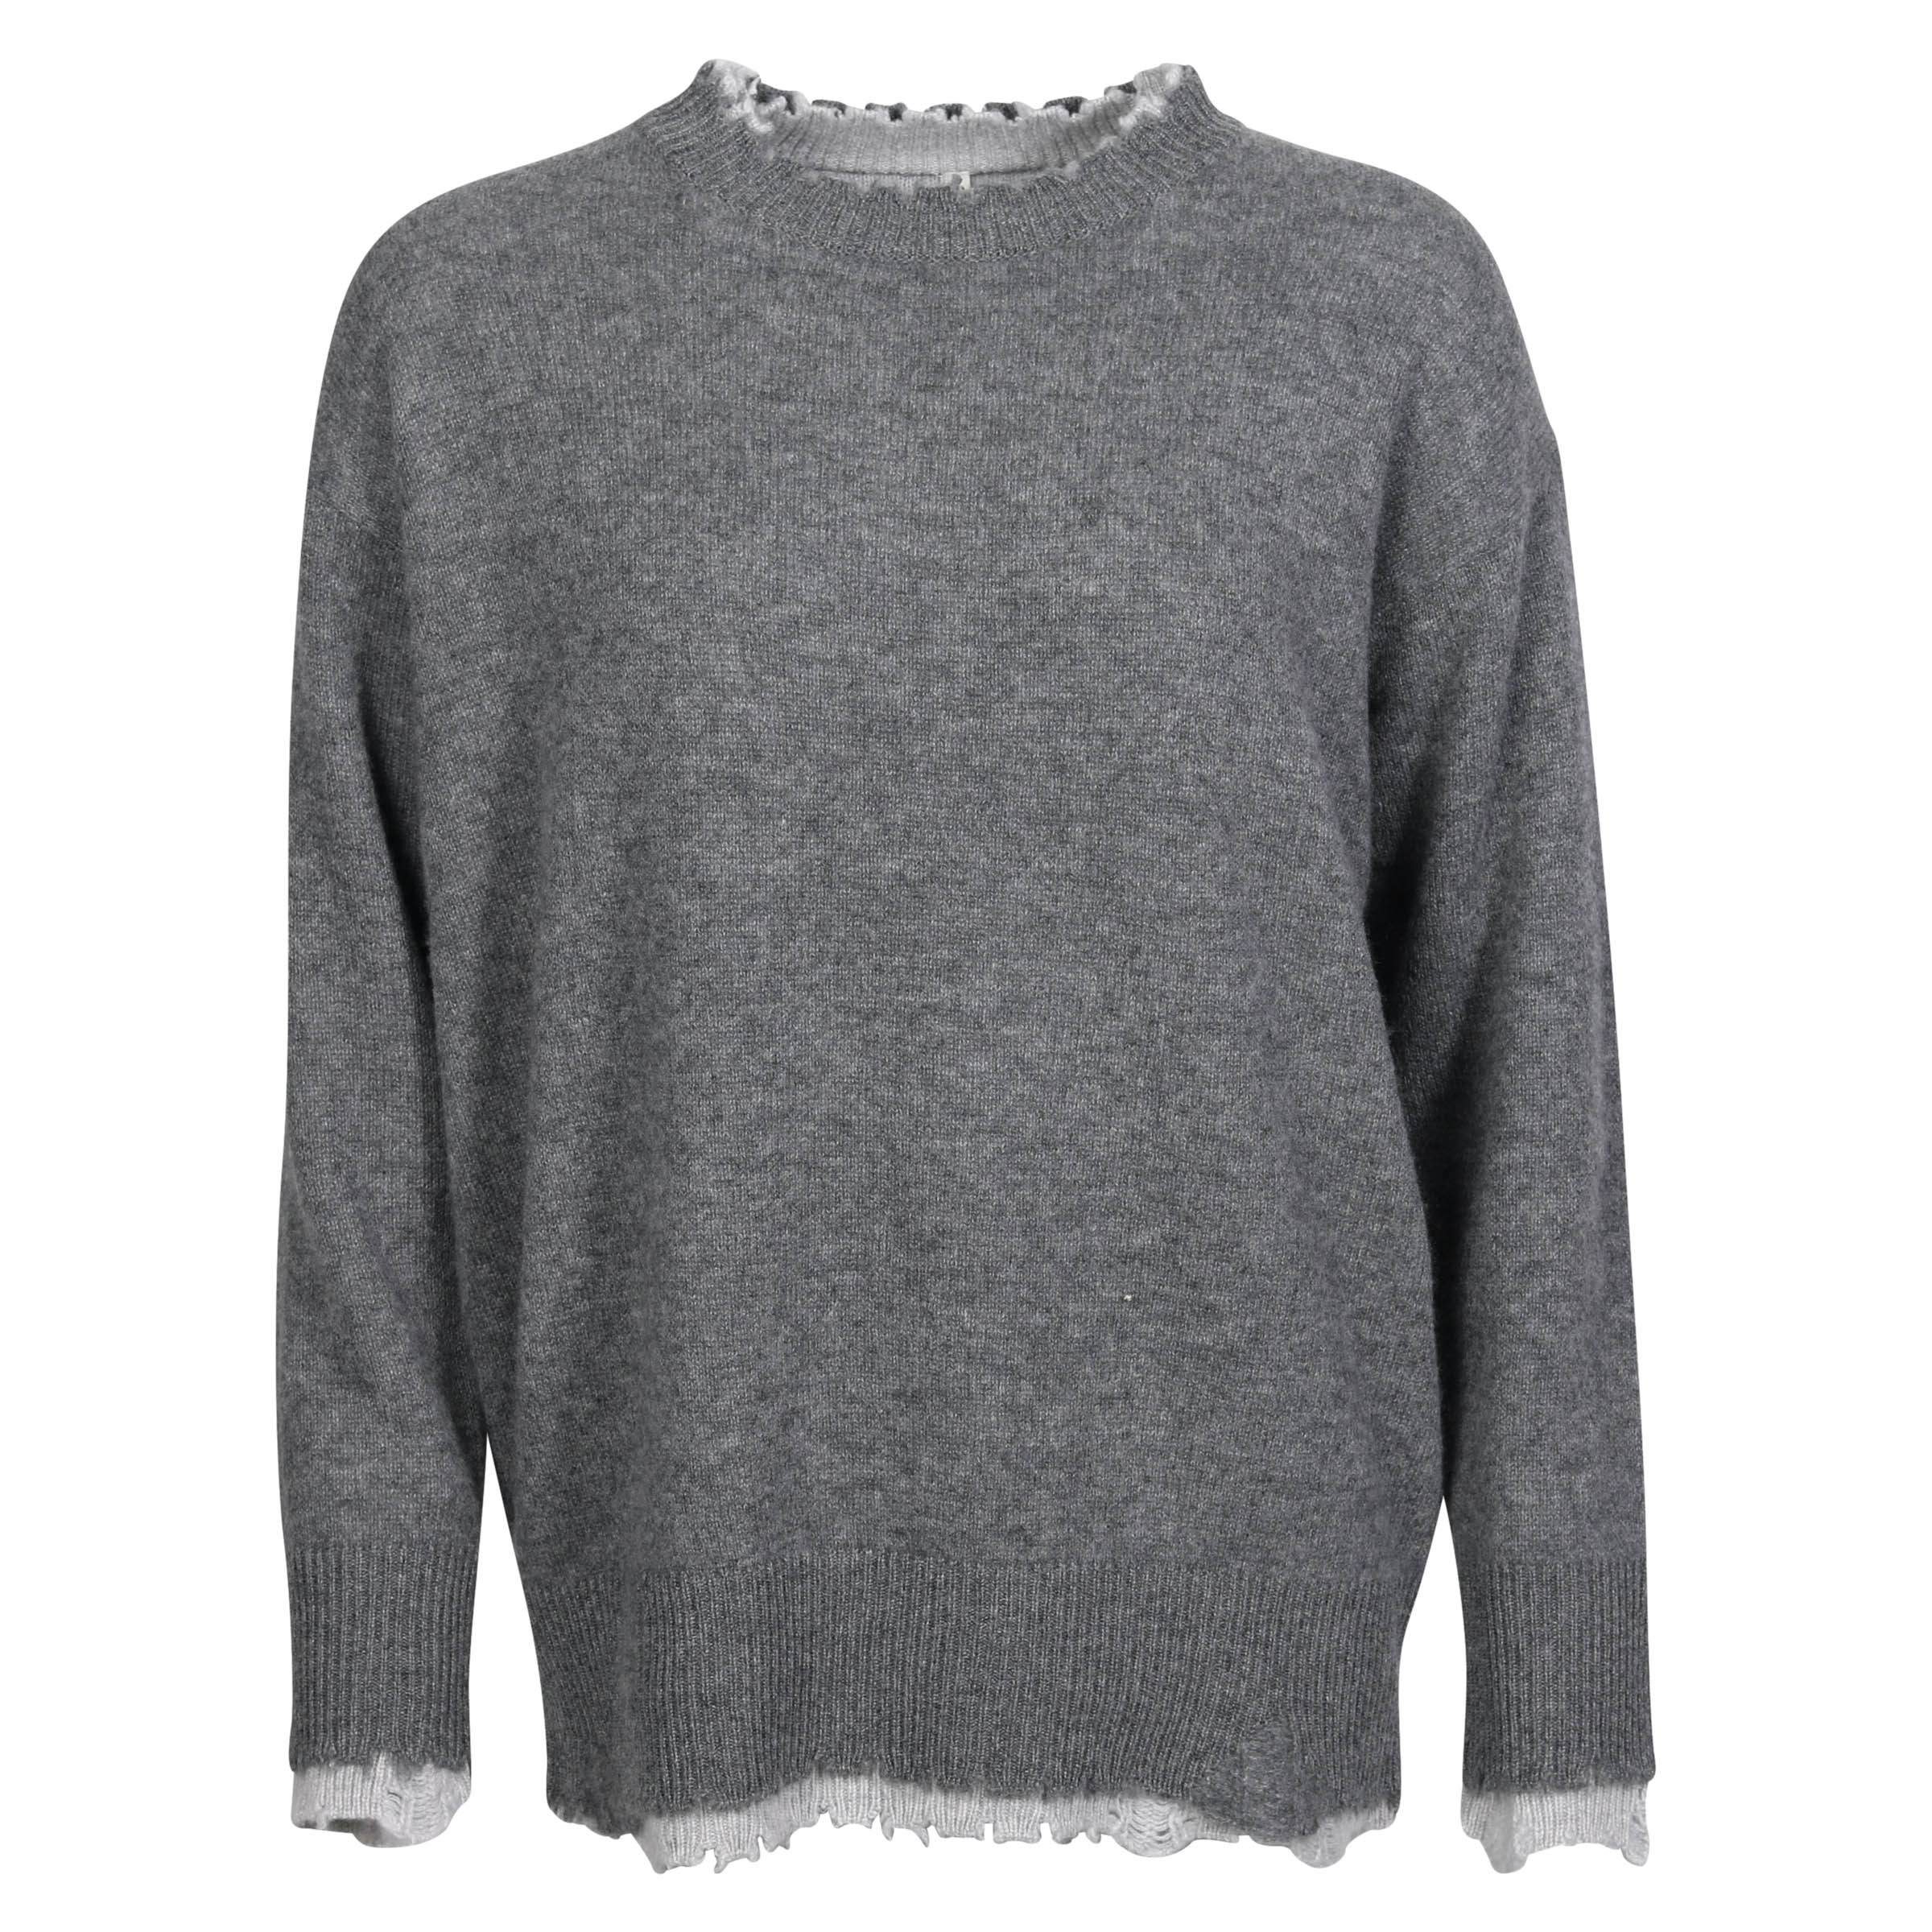 R13 Reversible Cashmere Sweater in Heathergrey L